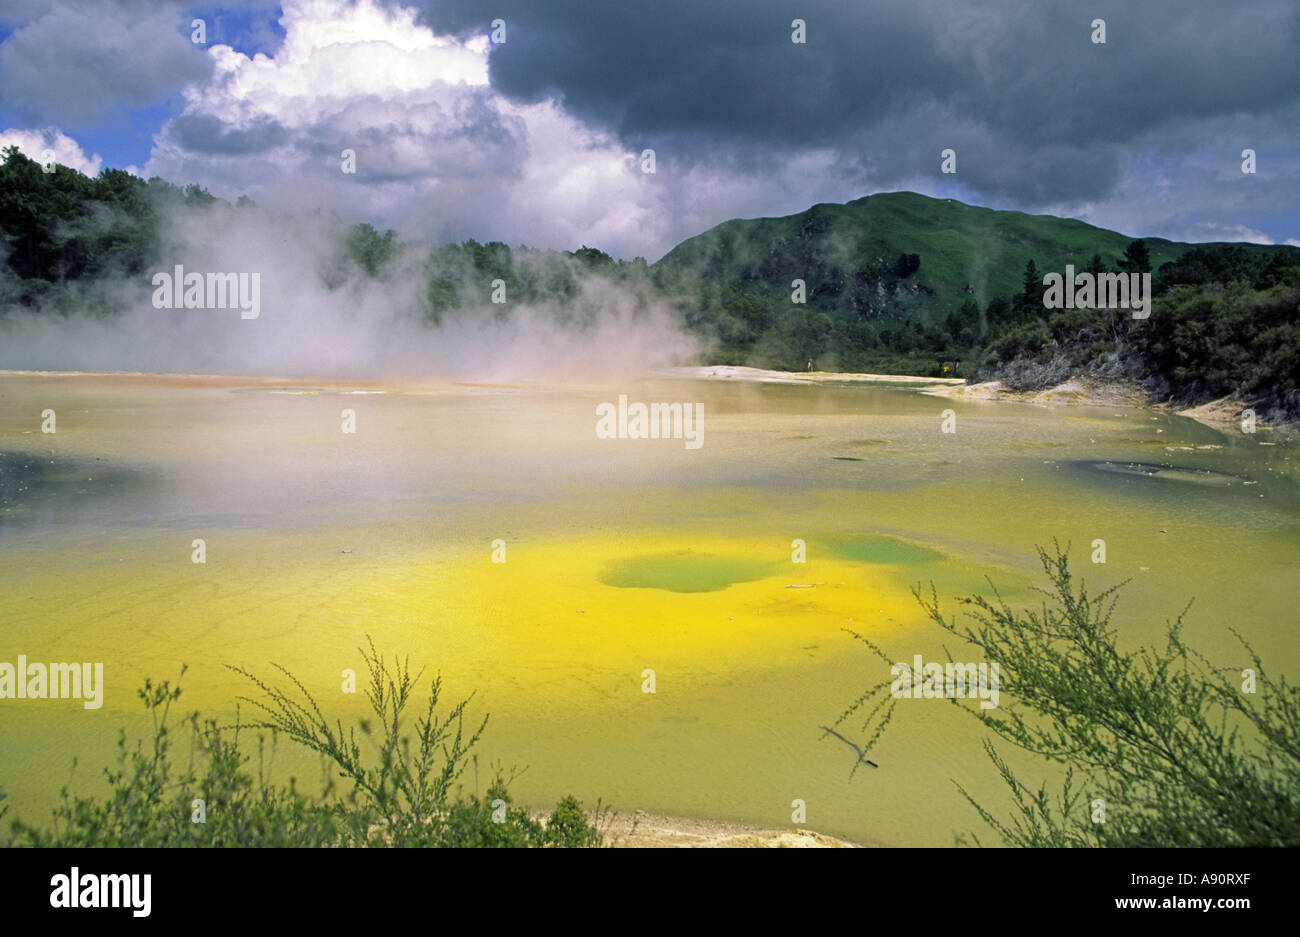 Nuova Zelanda Isola del nord vicino a Rotorua Waiotapu area termale piscine chamgane lago termale Foto Stock